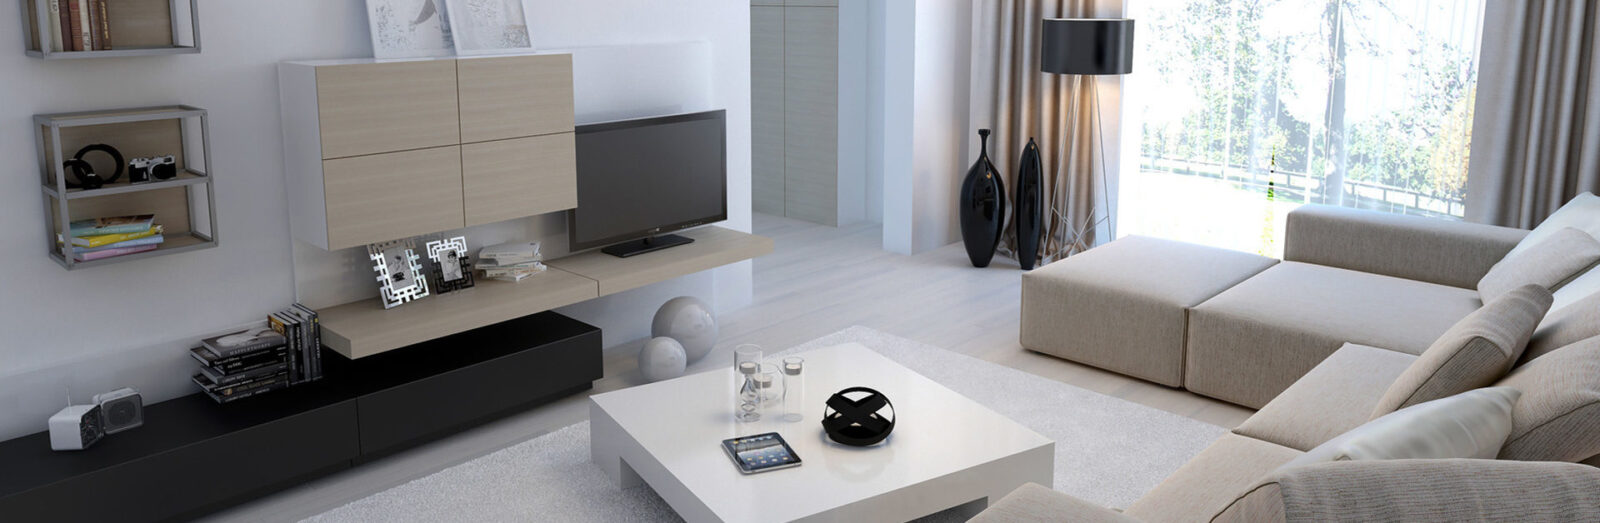 Modern interior living room, 3d images